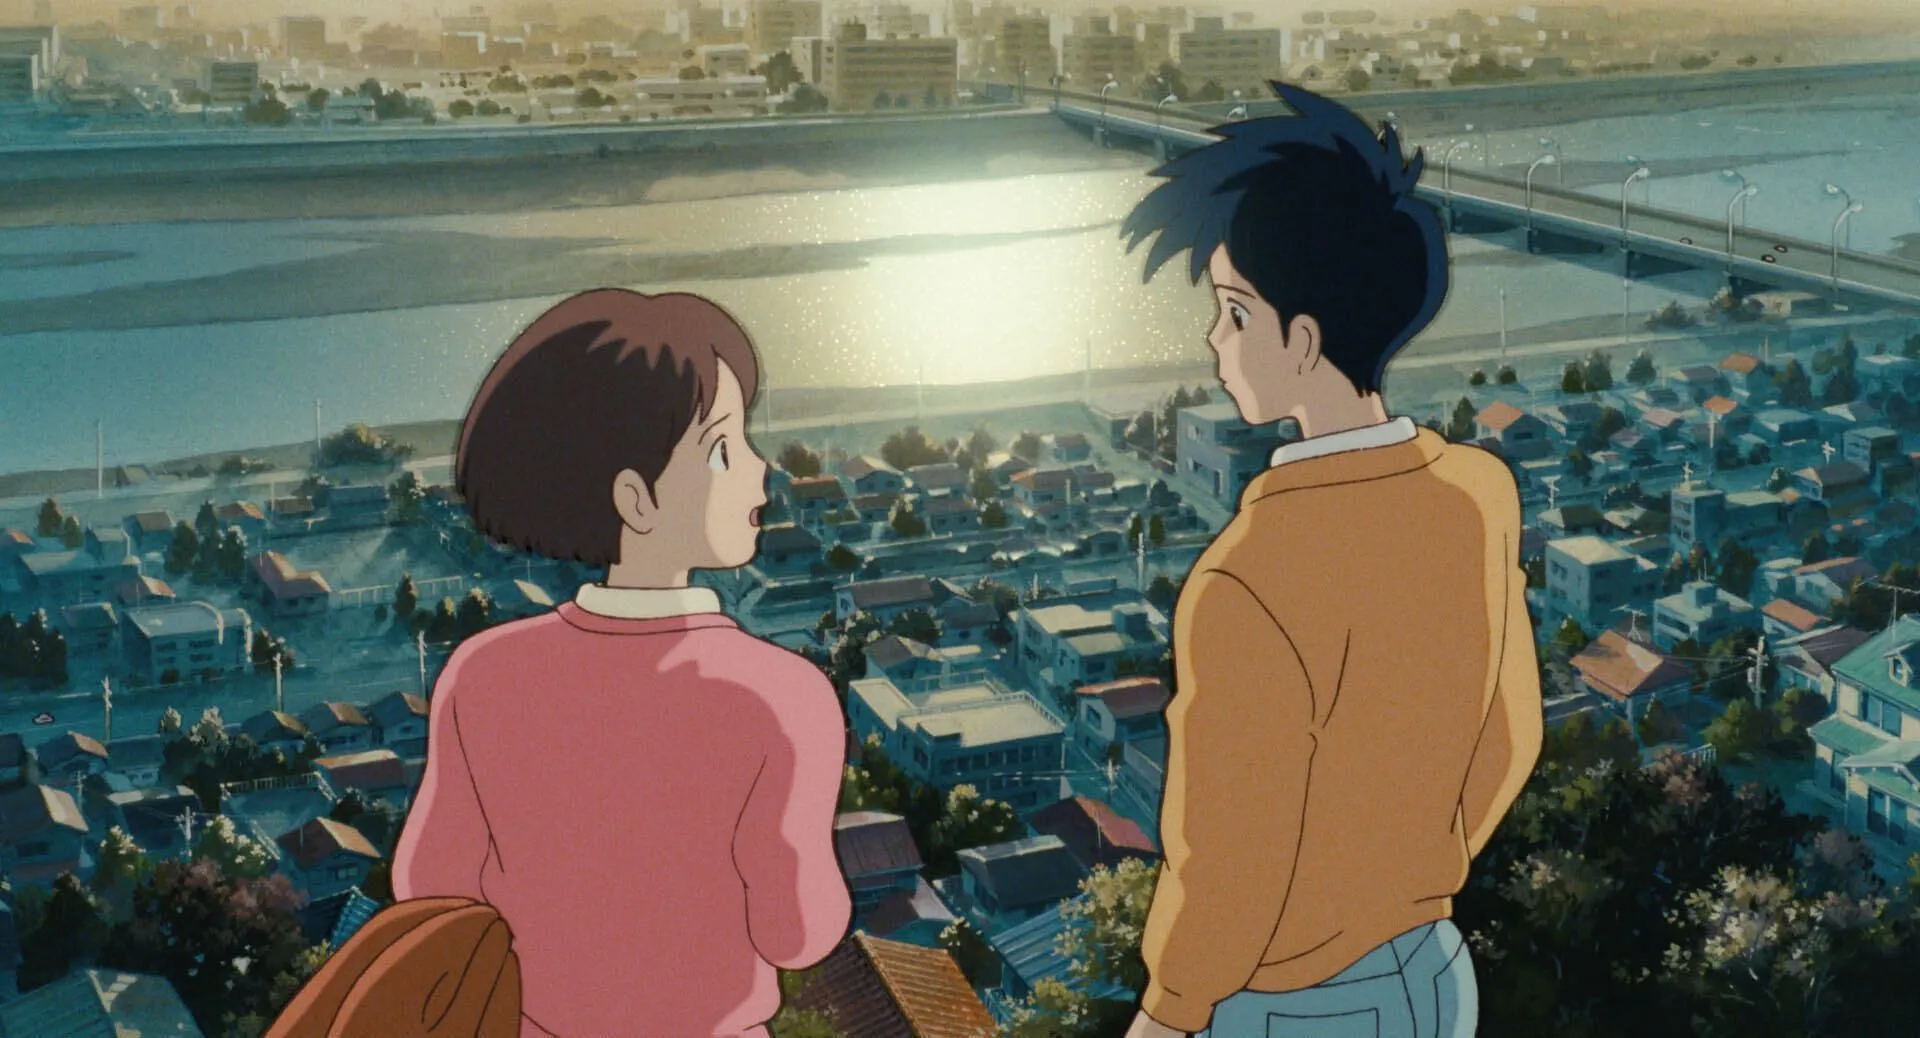 Whisper of the Heart (Image via Studio Ghibli)